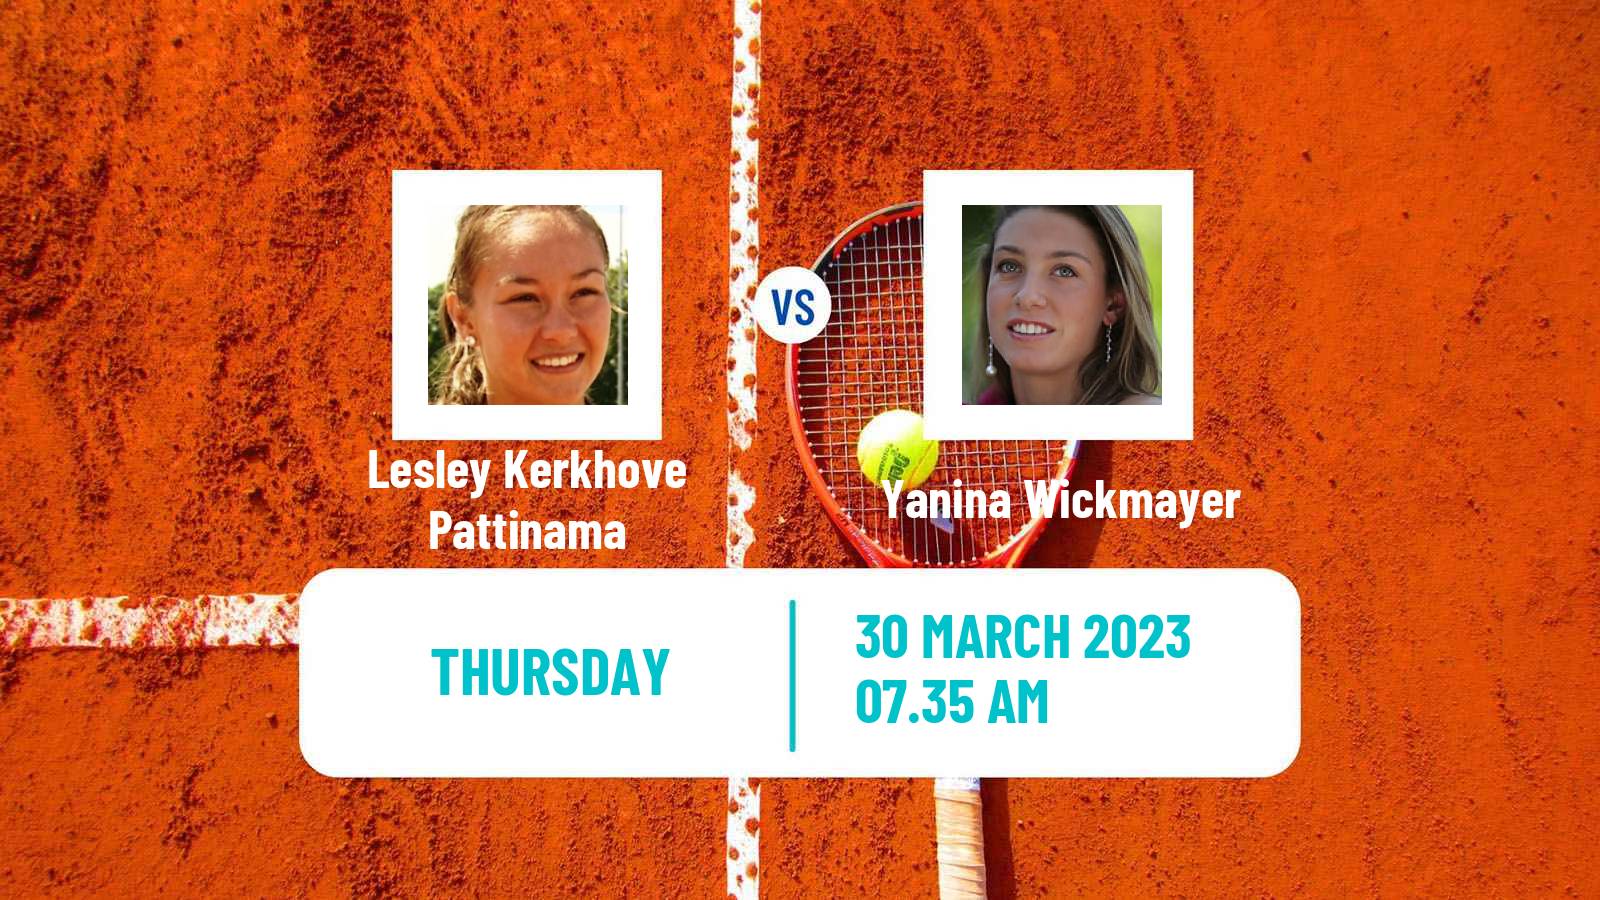 Tennis ITF Tournaments Lesley Kerkhove Pattinama - Yanina Wickmayer